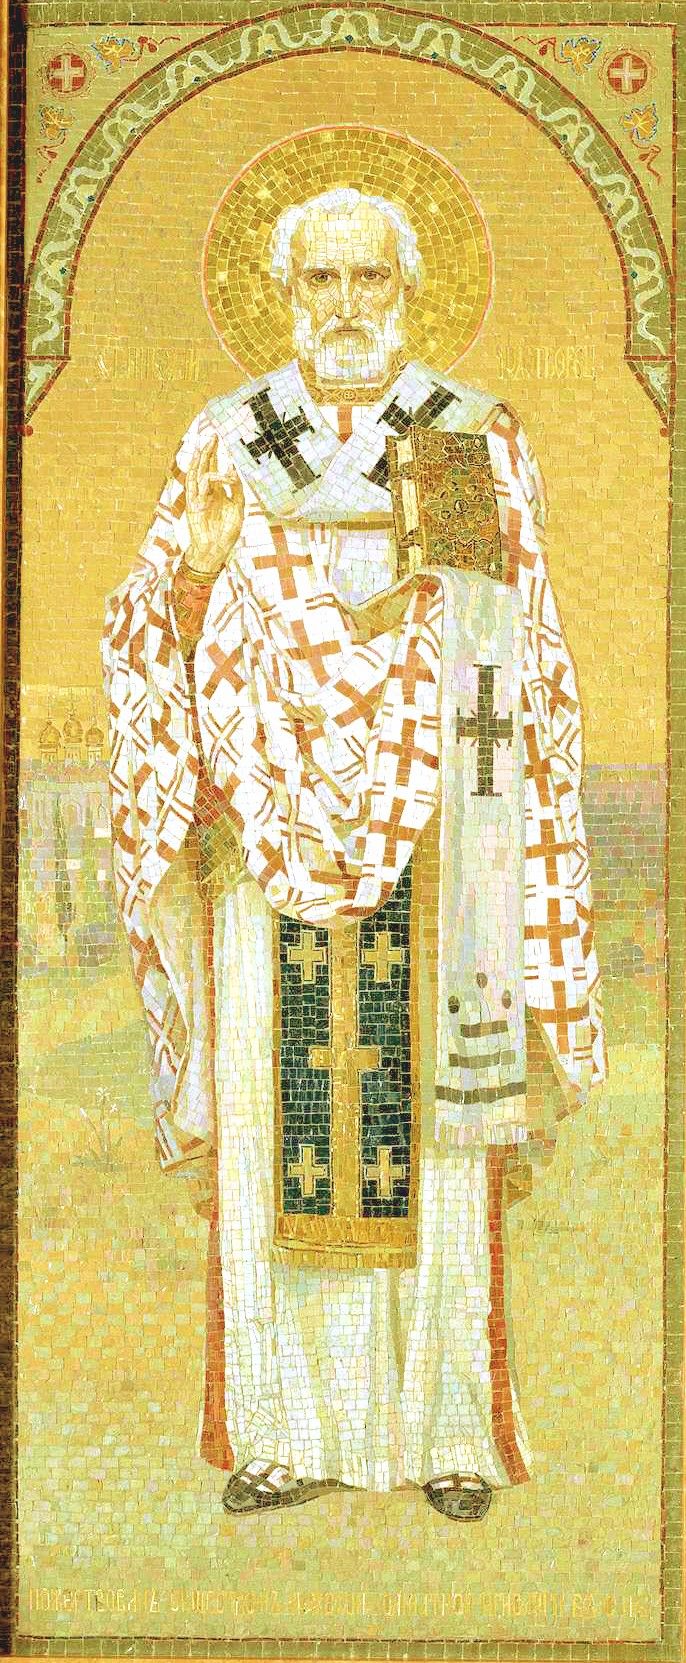 N. K. Bodarevsky, mosaics of the Spas na Krovi, St Petersburg, Russia, 1890s?